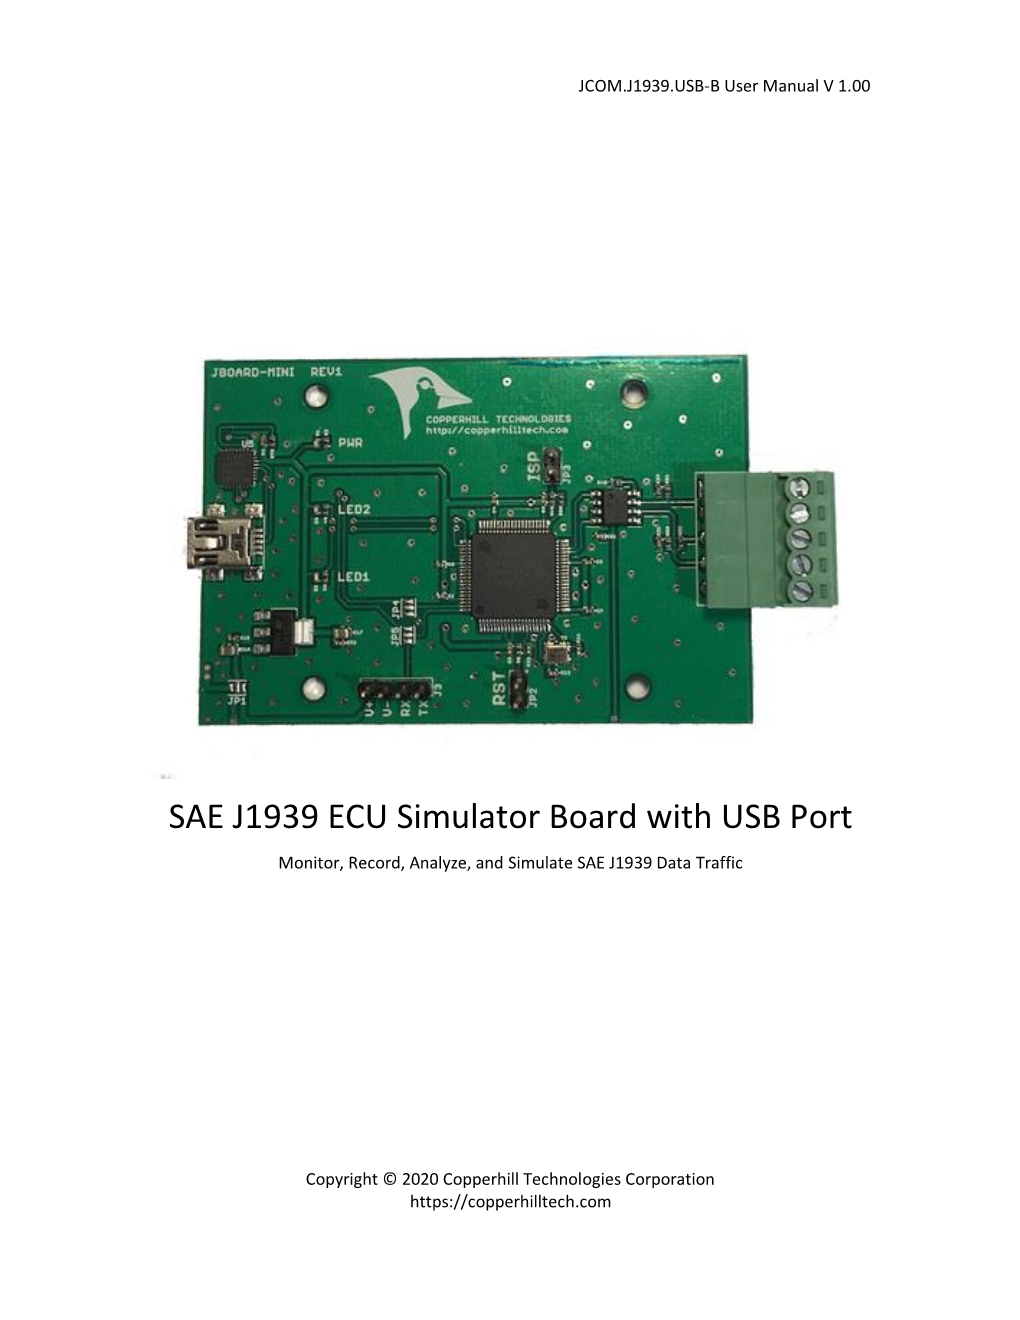 SAE J1939 ECU Simulator Board with USB Port Monitor, Record, Analyze, and Simulate SAE J1939 Data Traffic